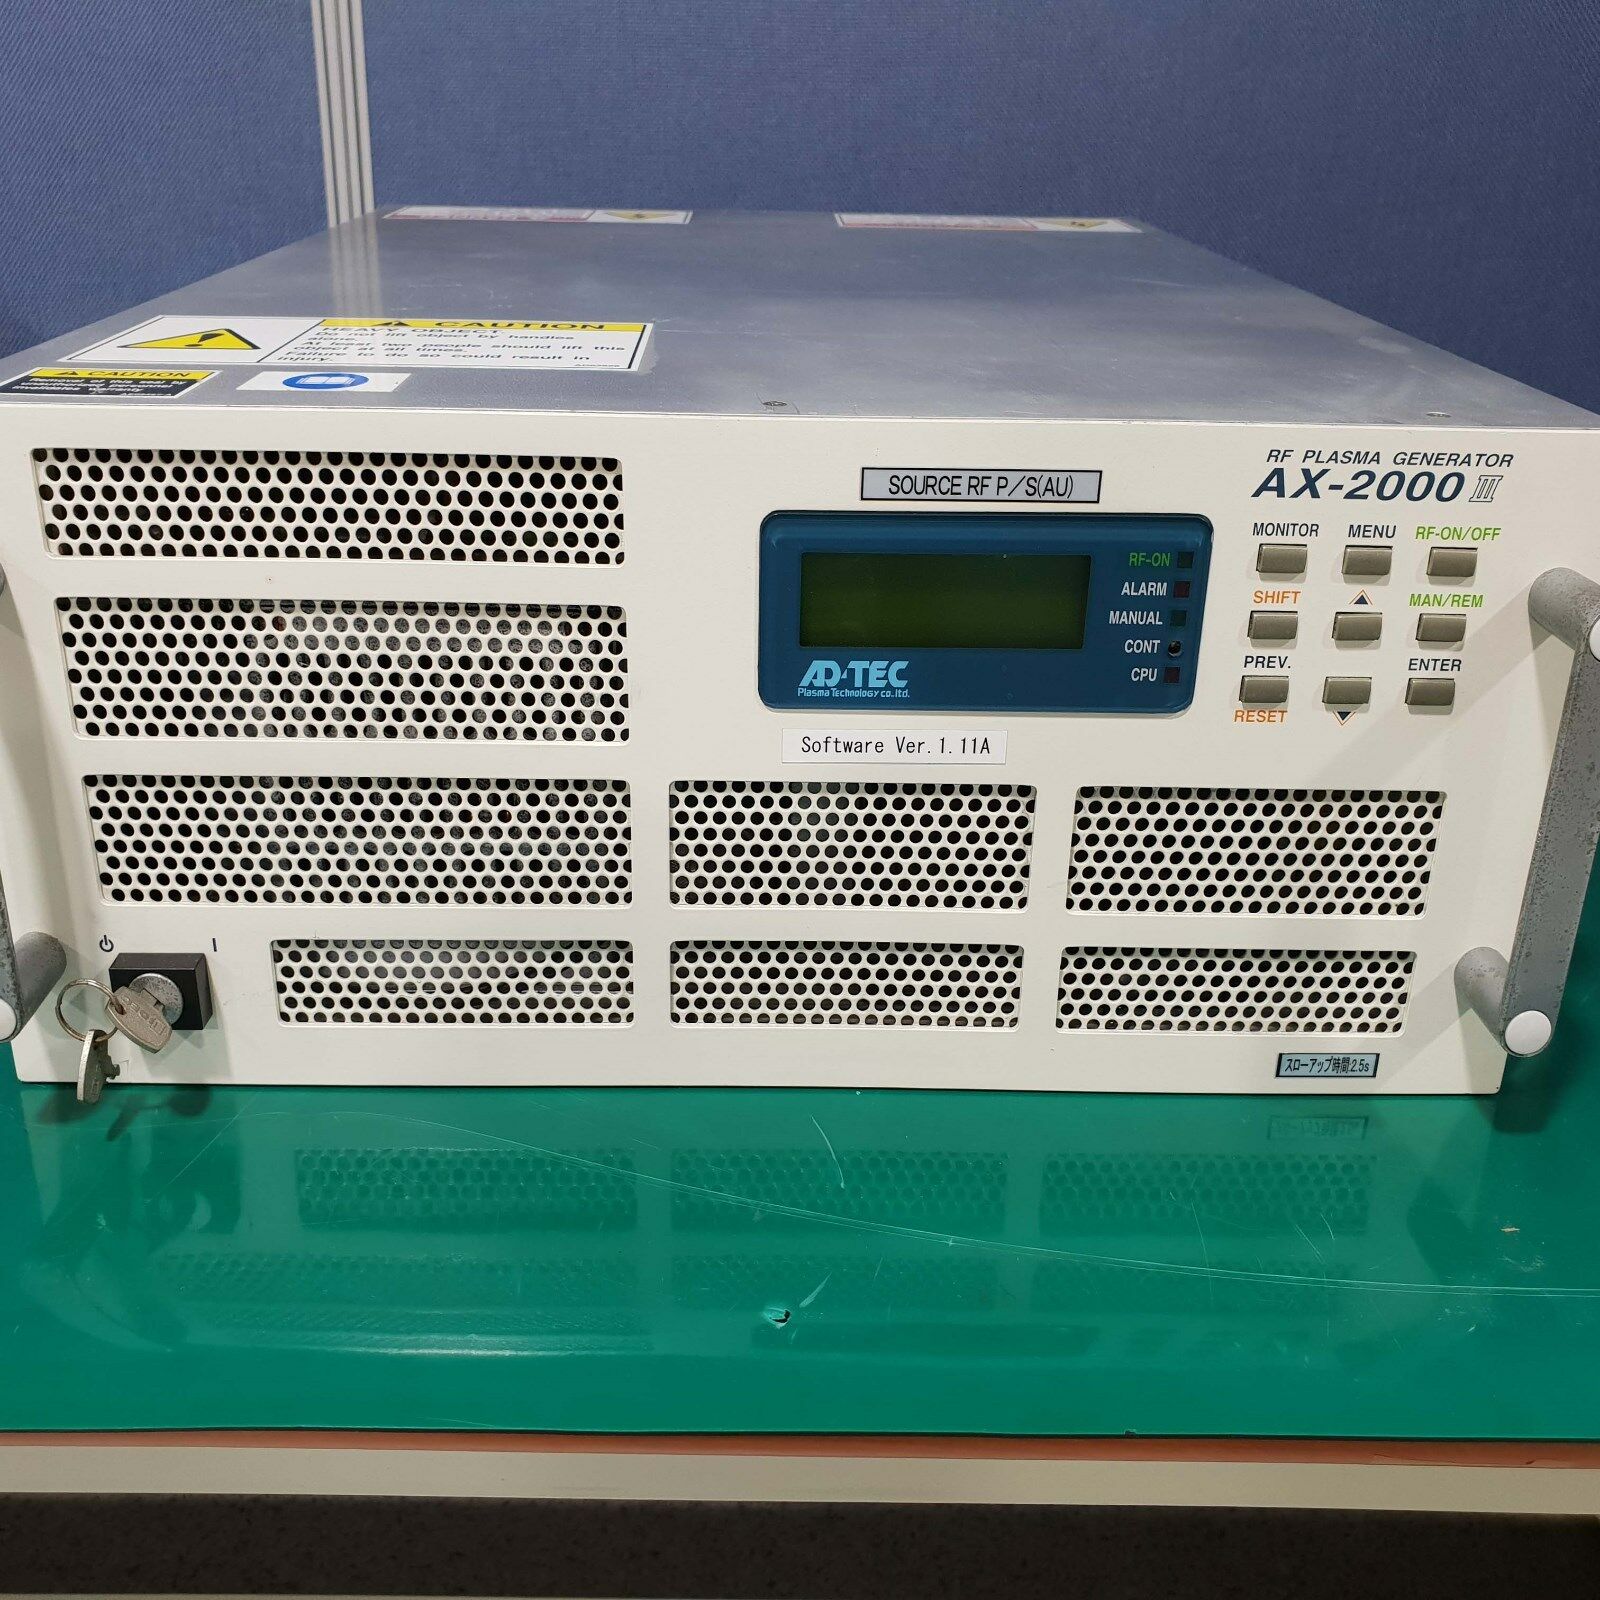 AD-TEC RF射频电源 AX-2000III-H维修